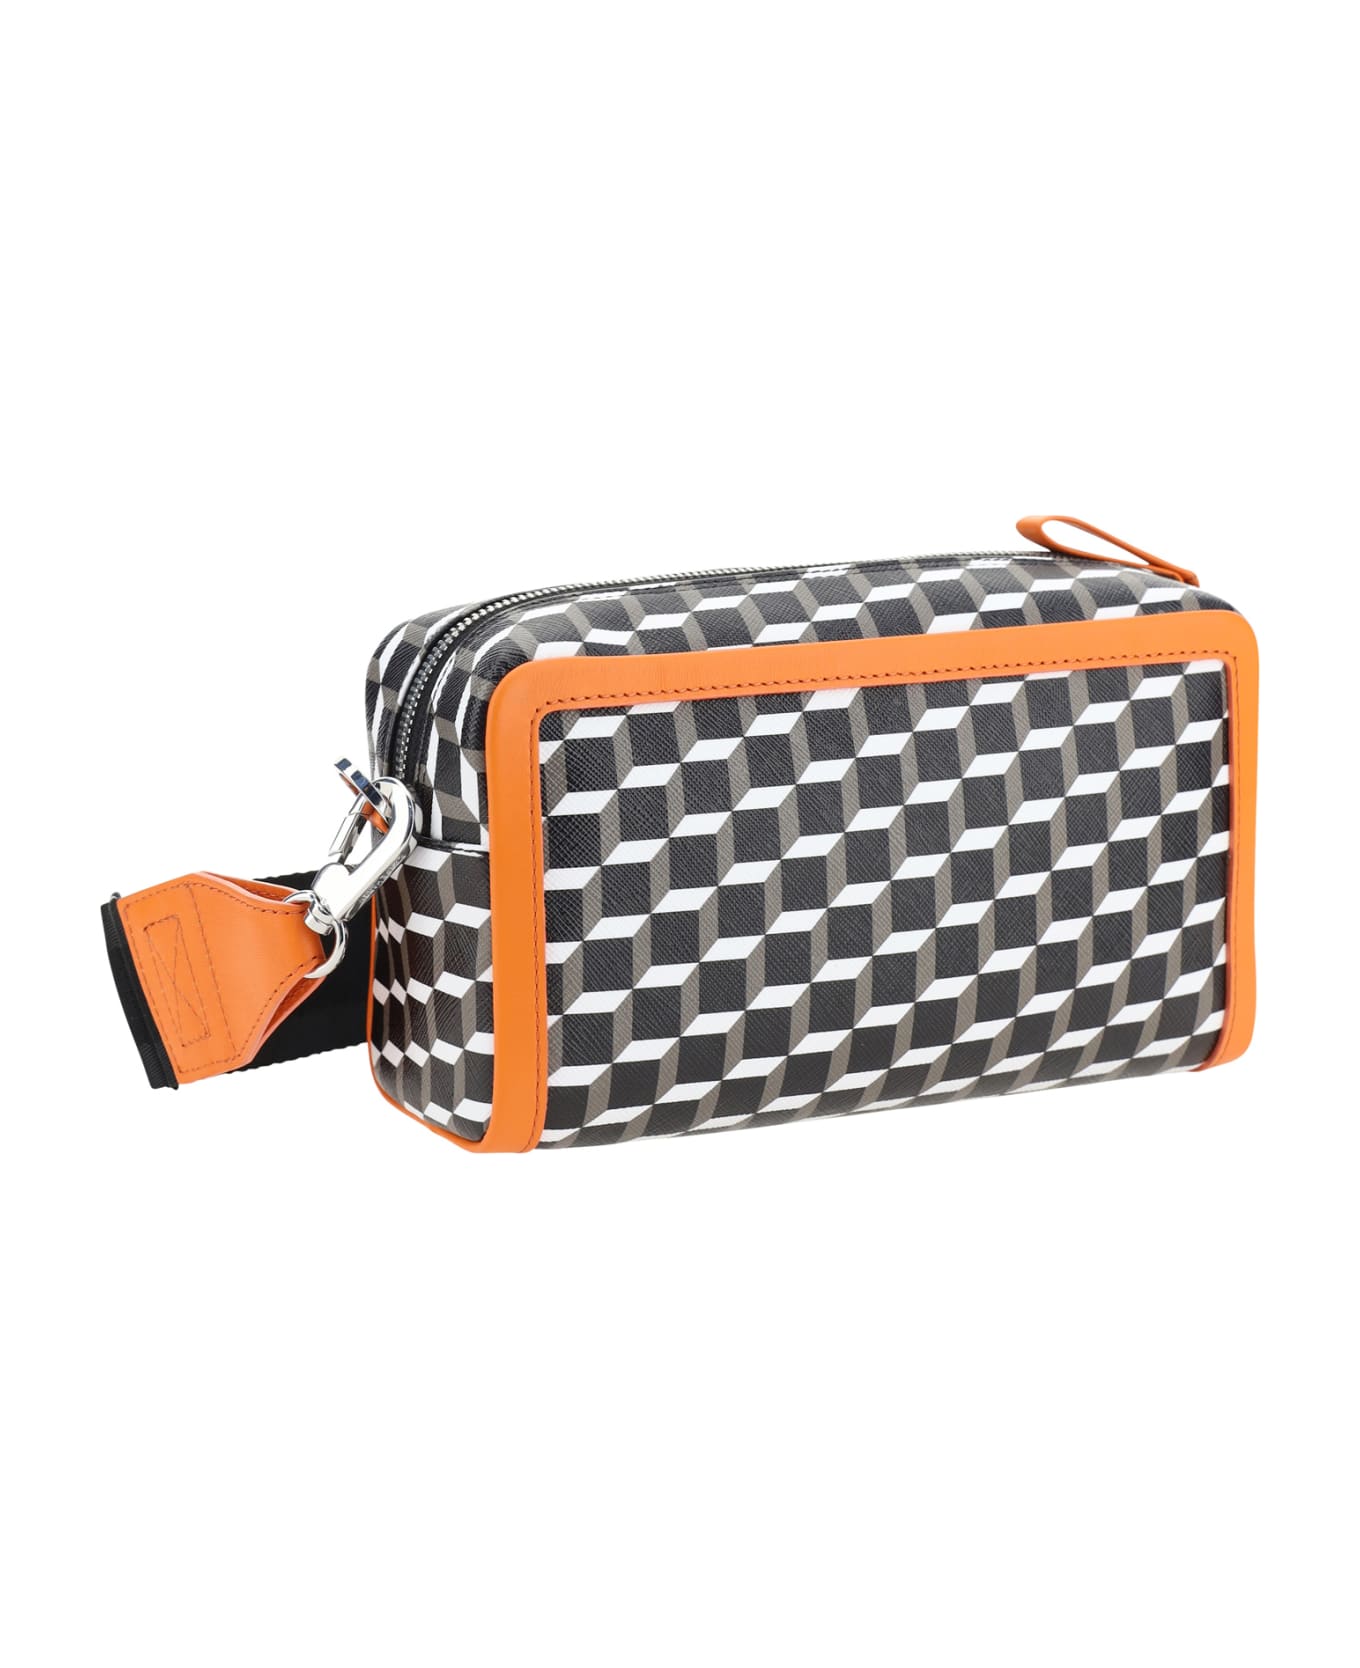 Pierre Hardy Cube Box Shoulder Bag - Black/white/orange クラッチバッグ